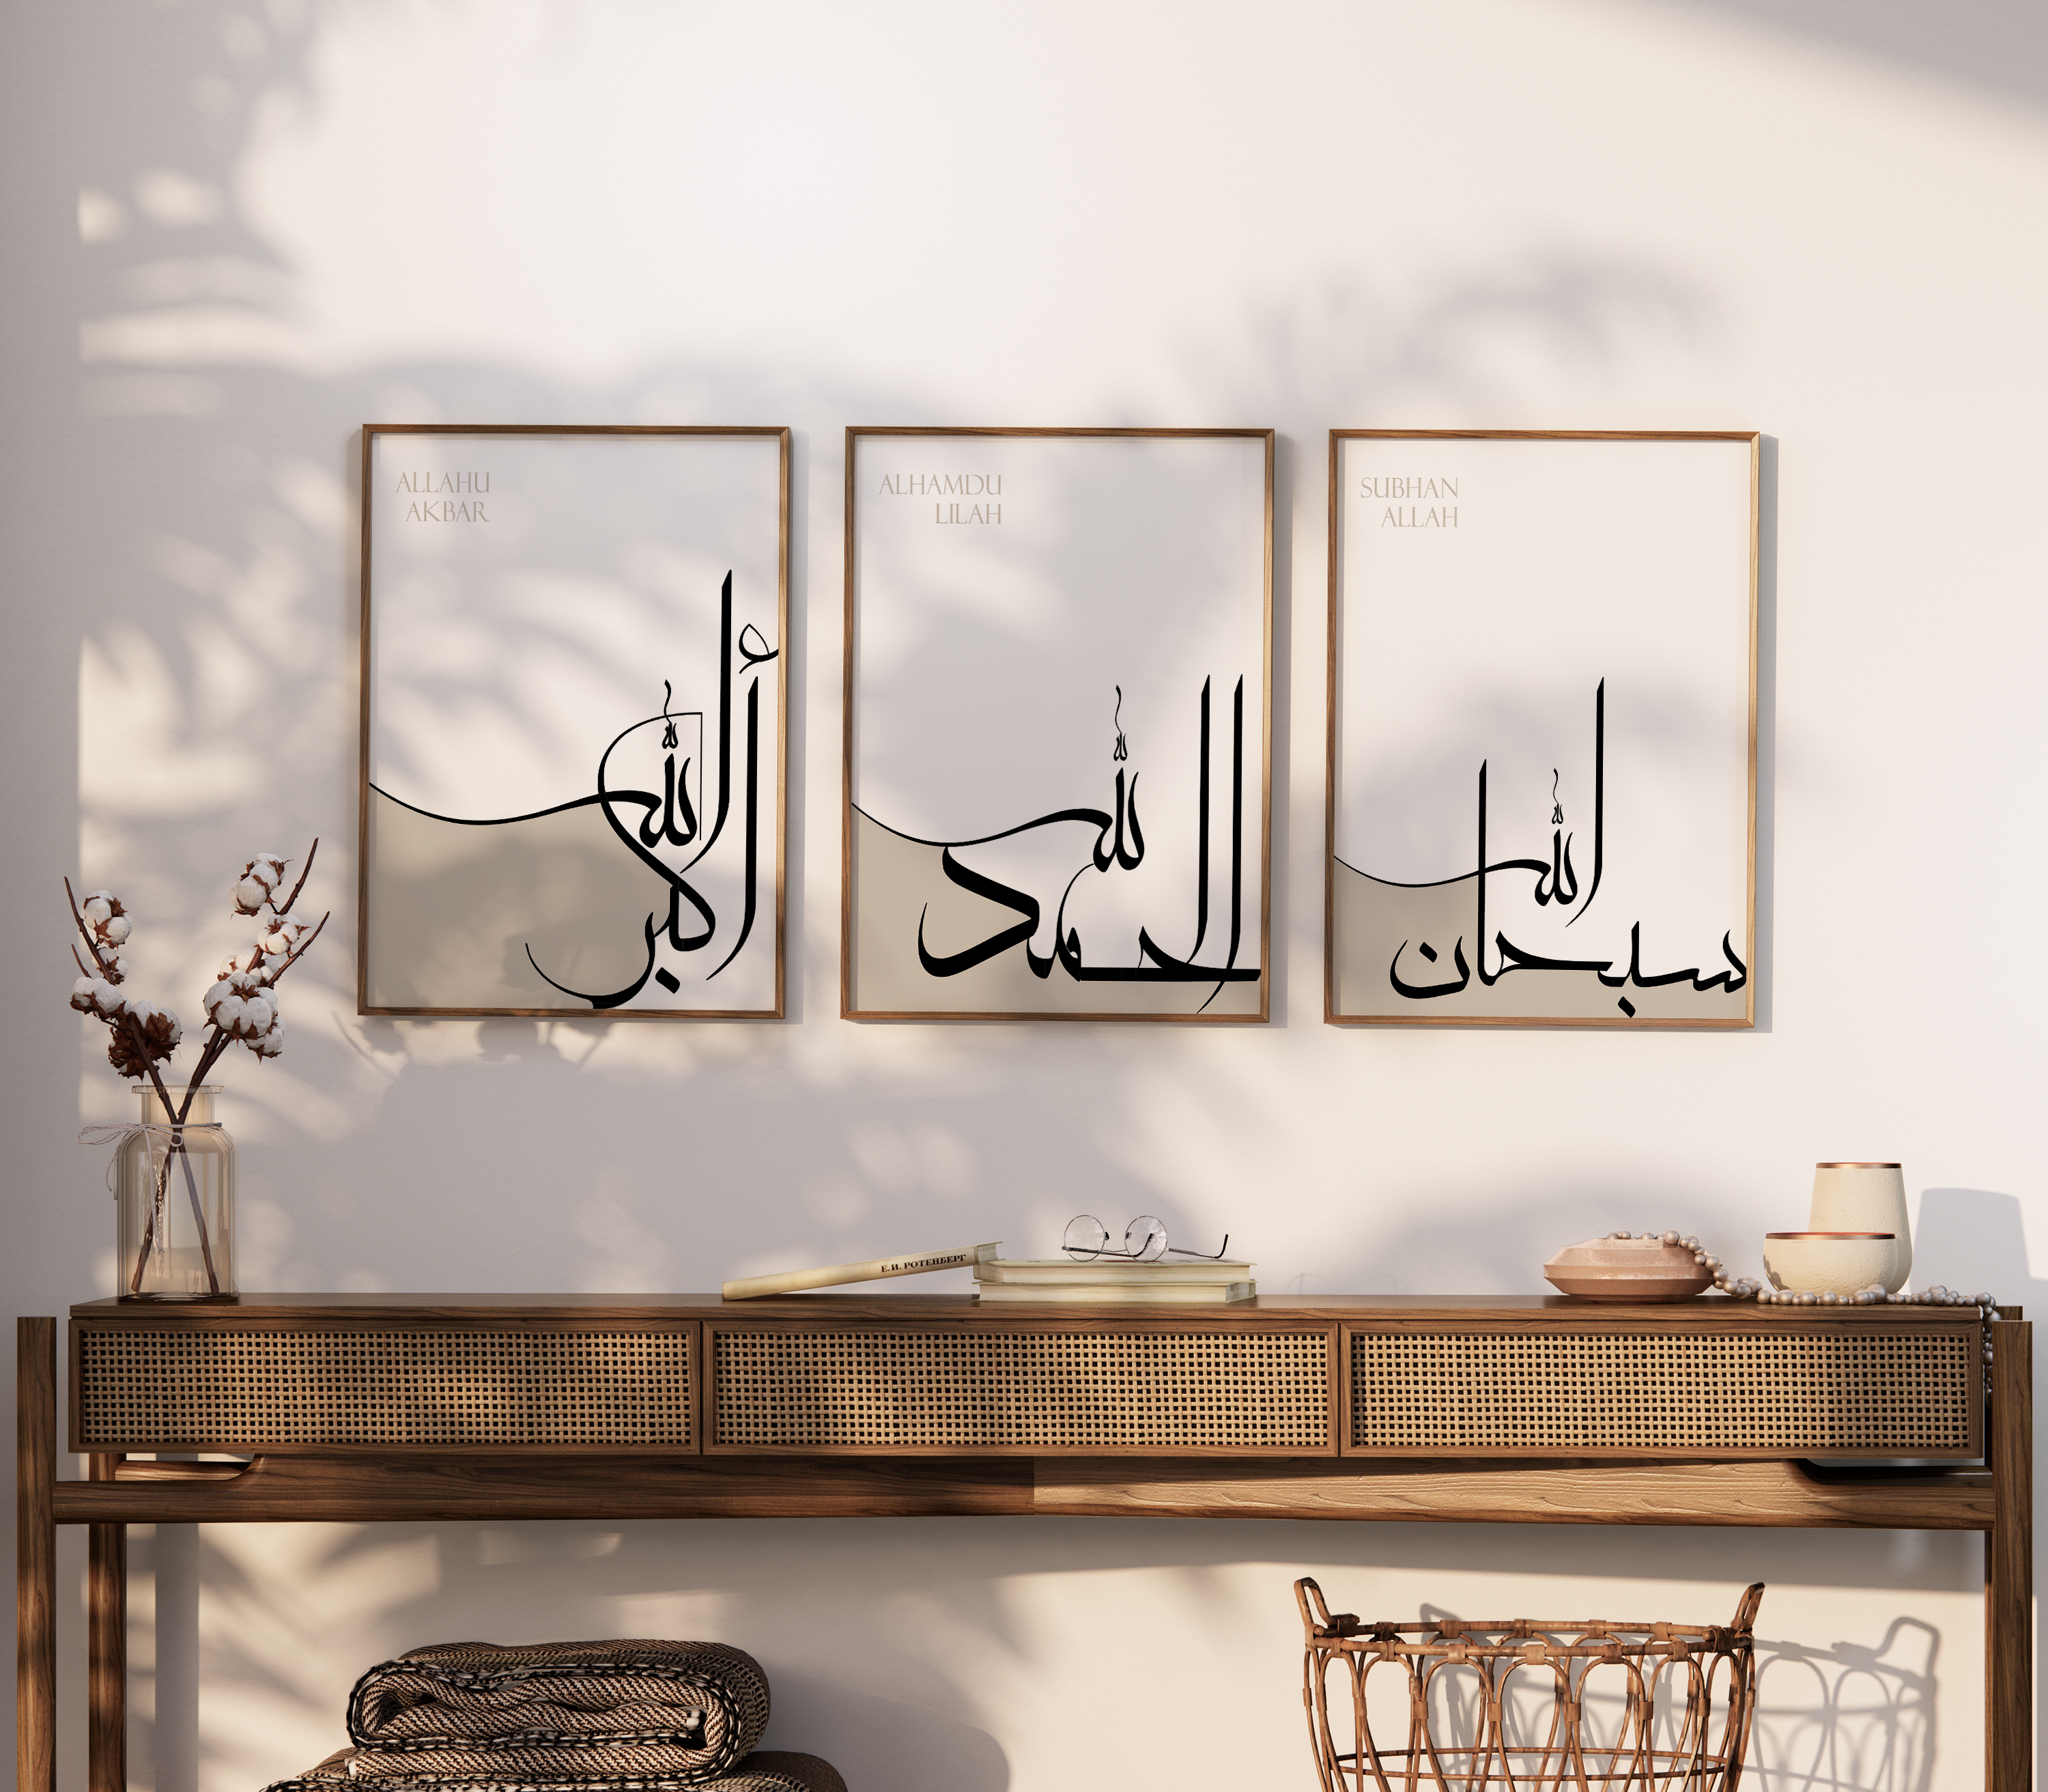 SubhanAllah, Alhamdulillah, AllahuAkbar Minimal Islamic wall art Poster set